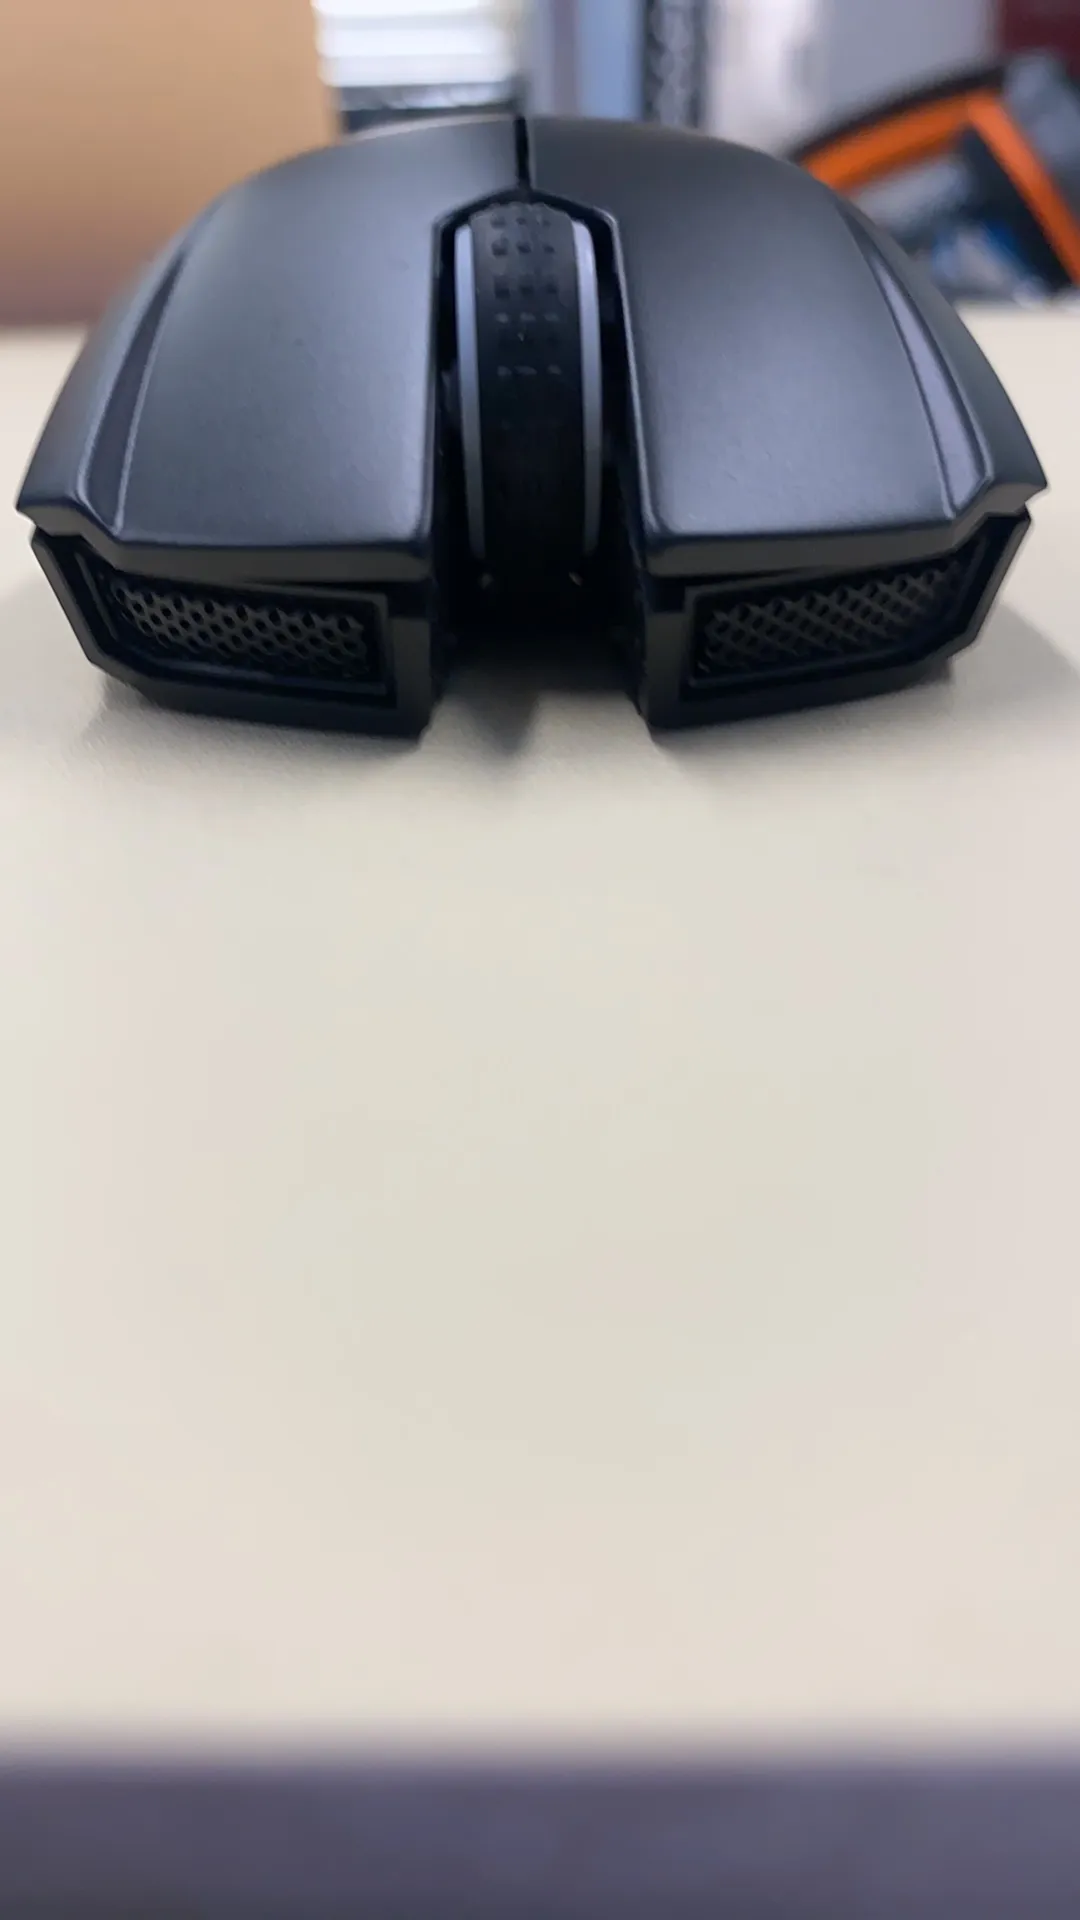 Razer Atheris Ambidextrous Wireless Mouse: 7200 DPI Optical media